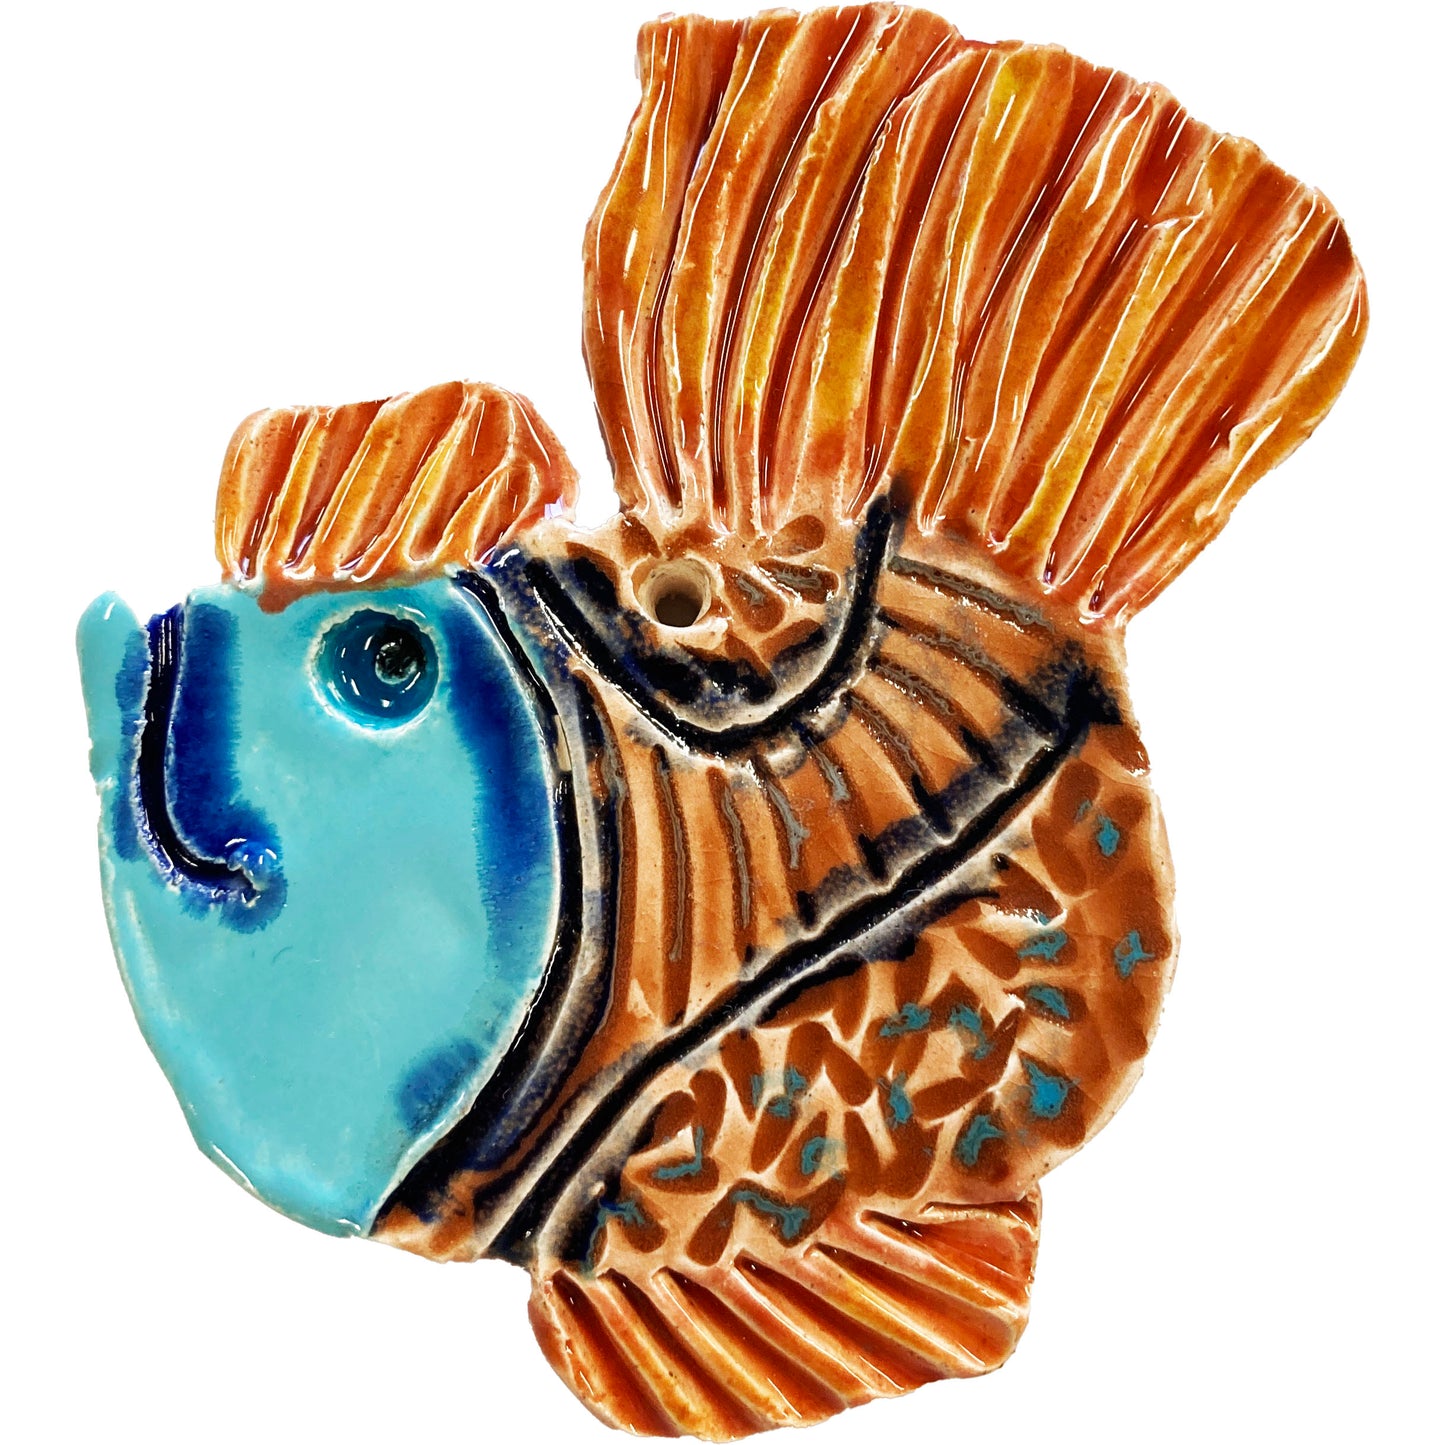 Ceramic Arts Handmade Clay Crafts Fresh Fish 4-inch x 3-inch Glazed